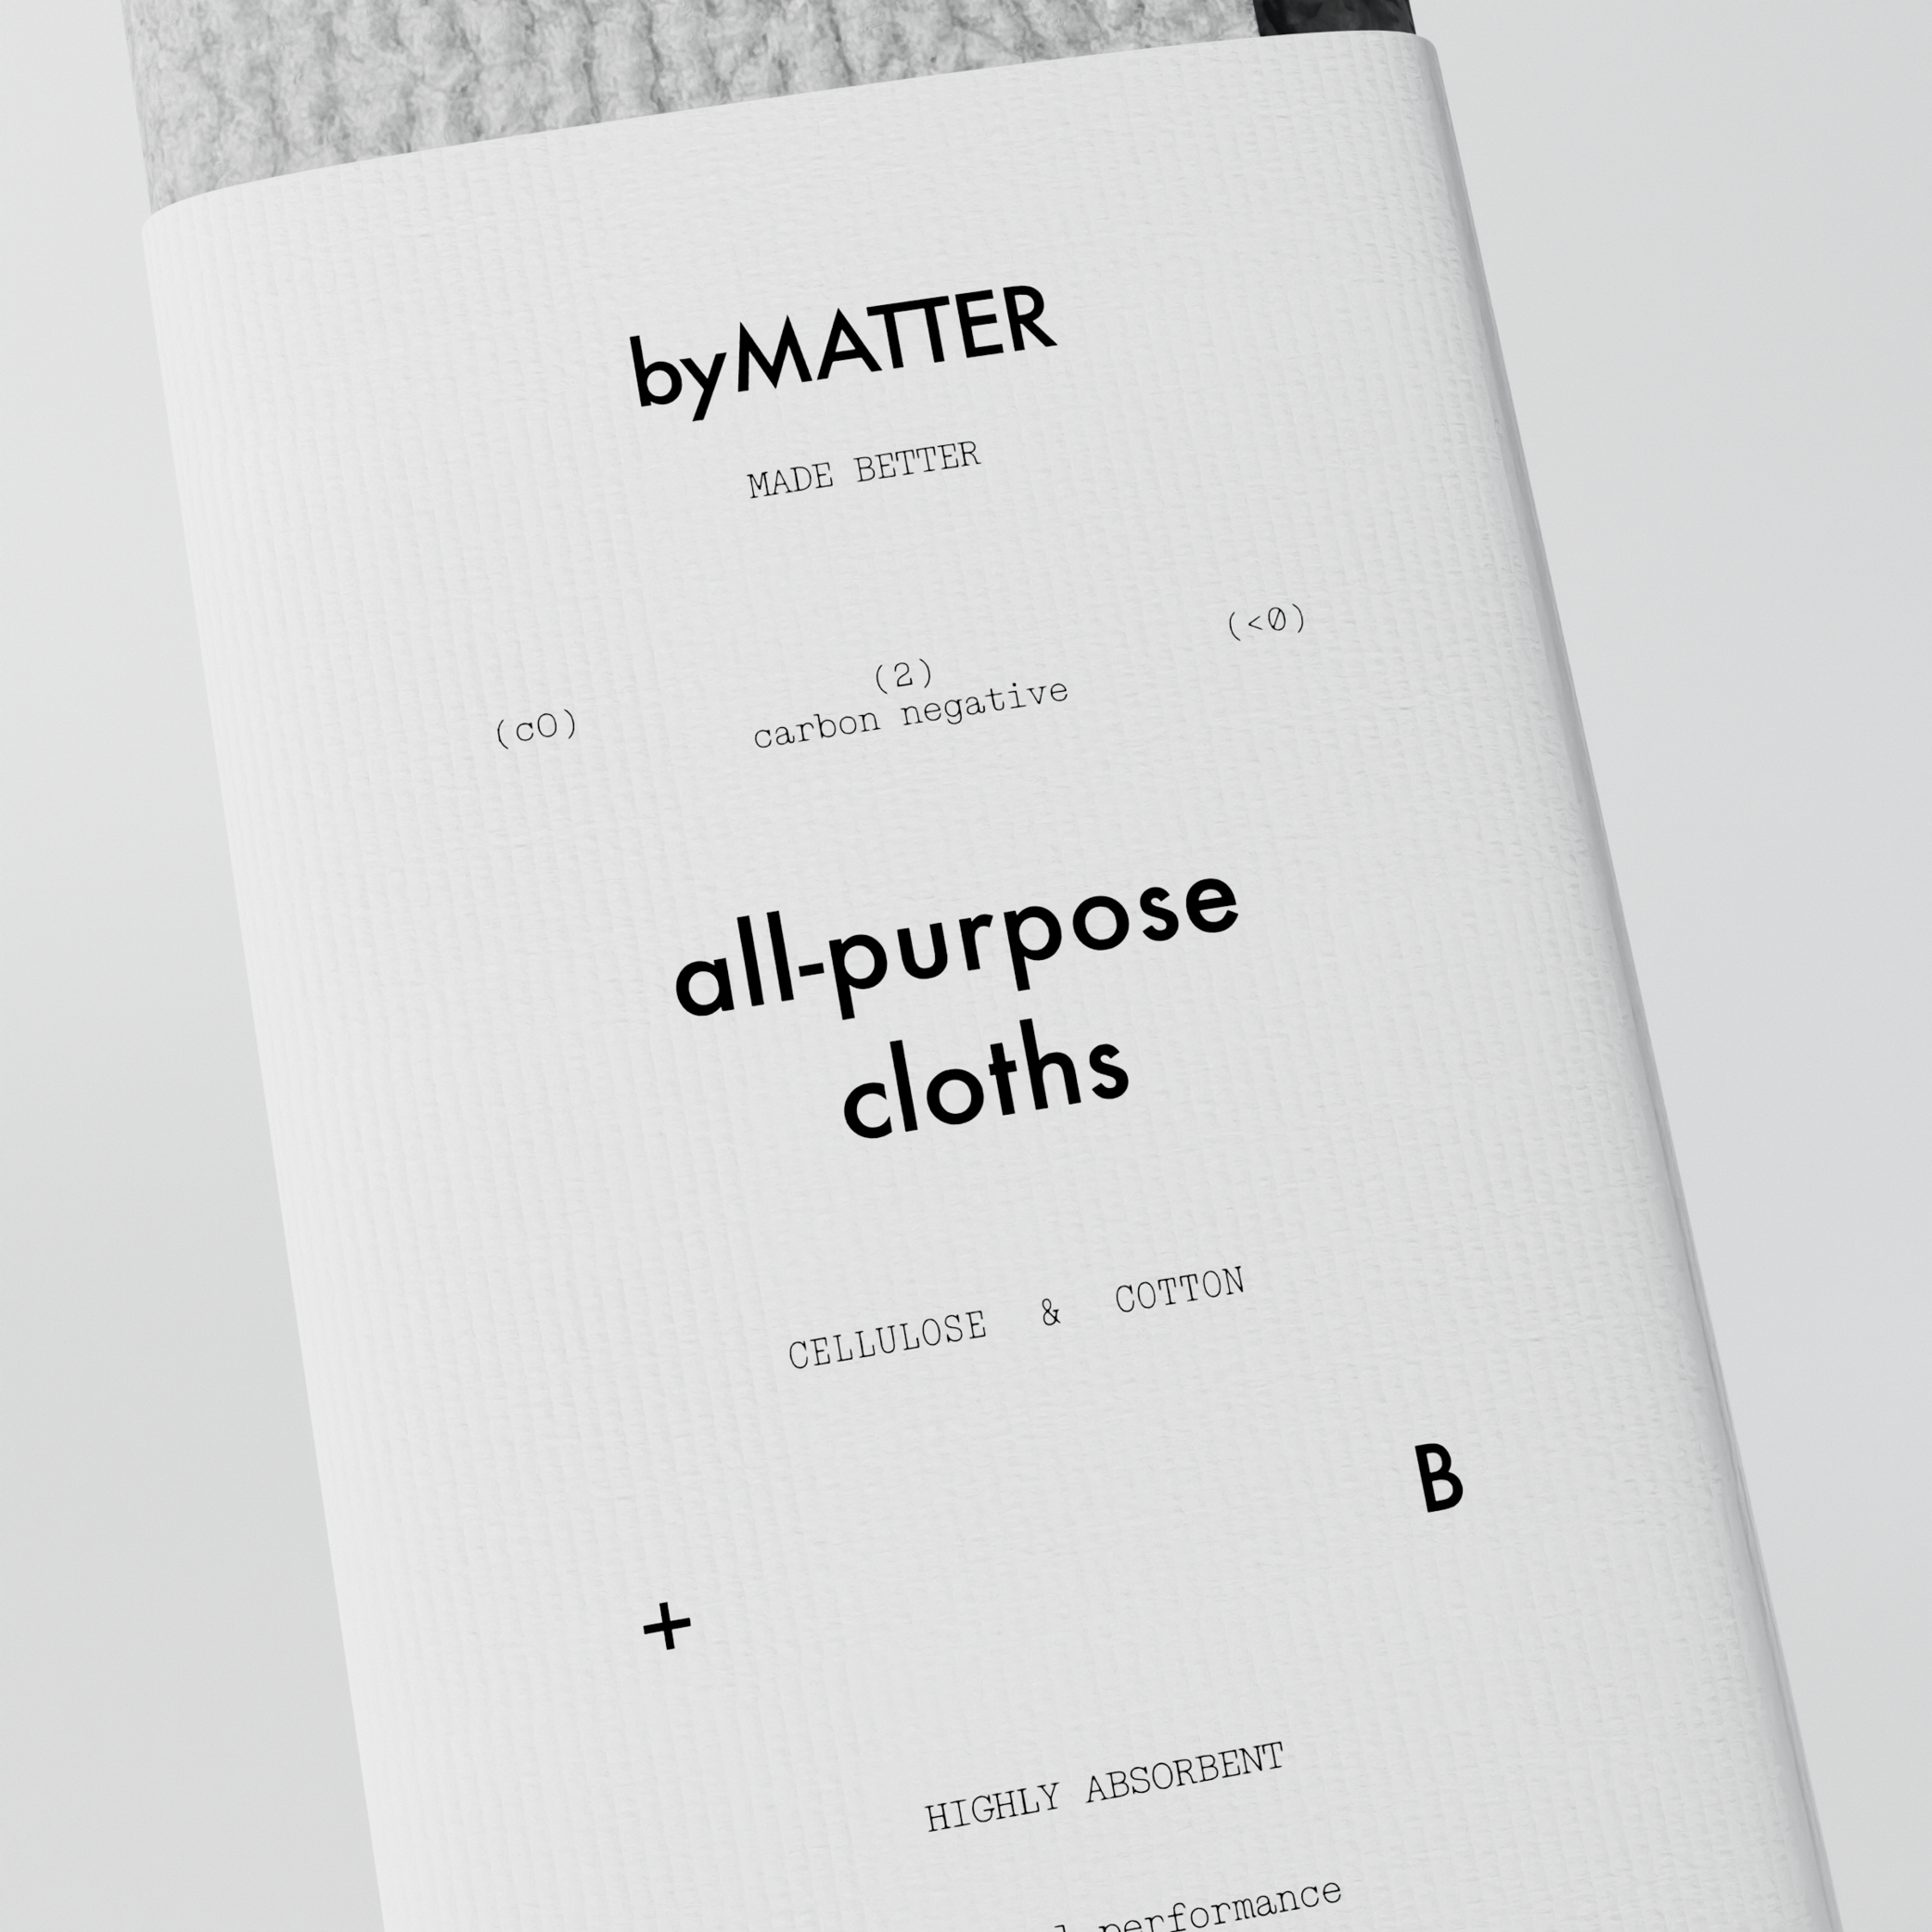 all-purpose cloths